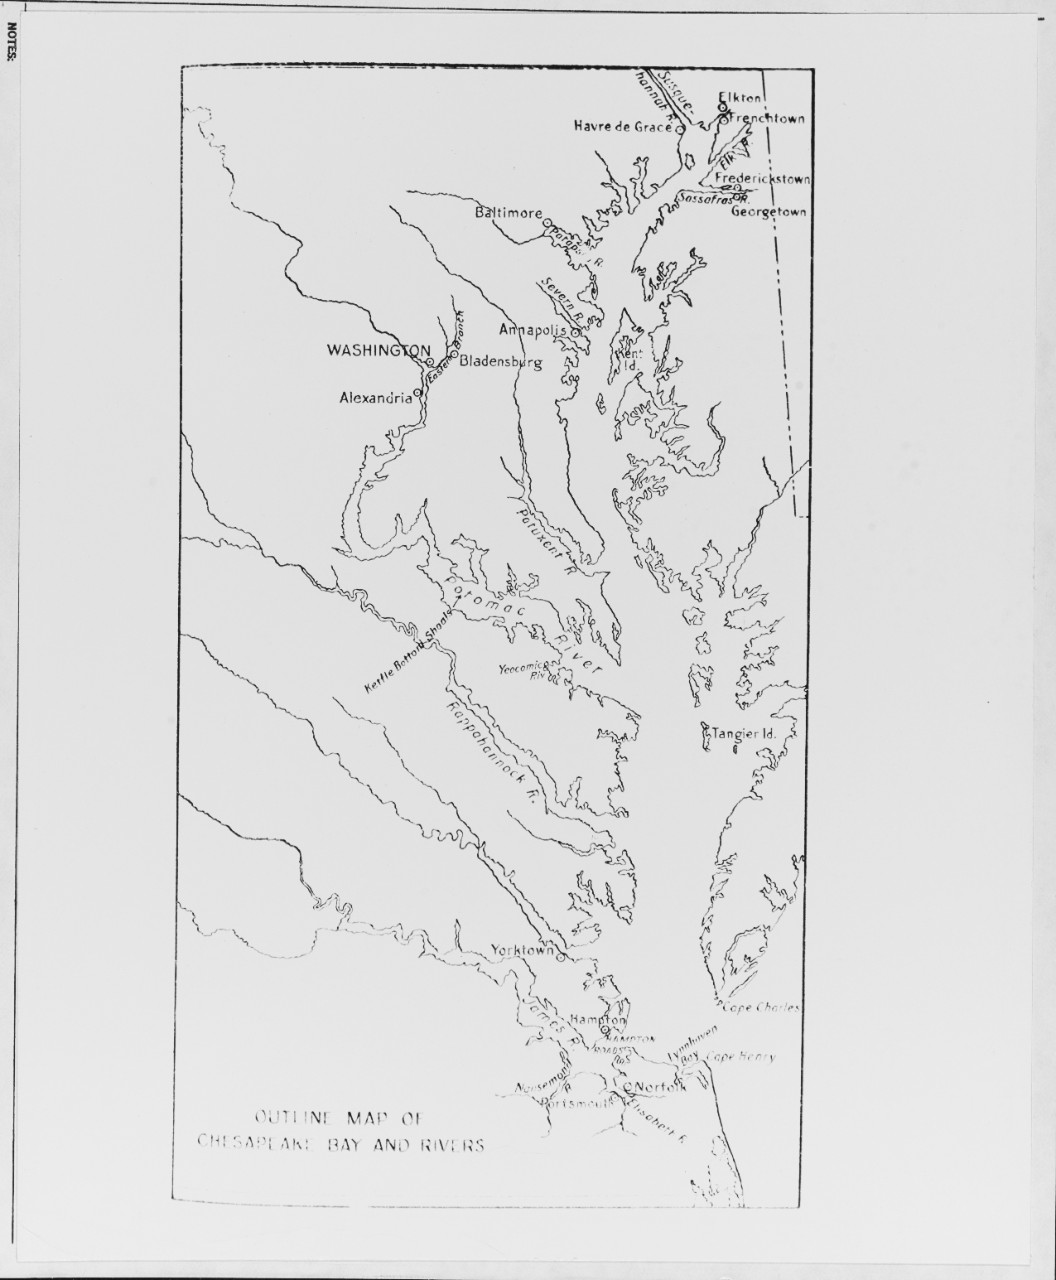 chesapeake river map